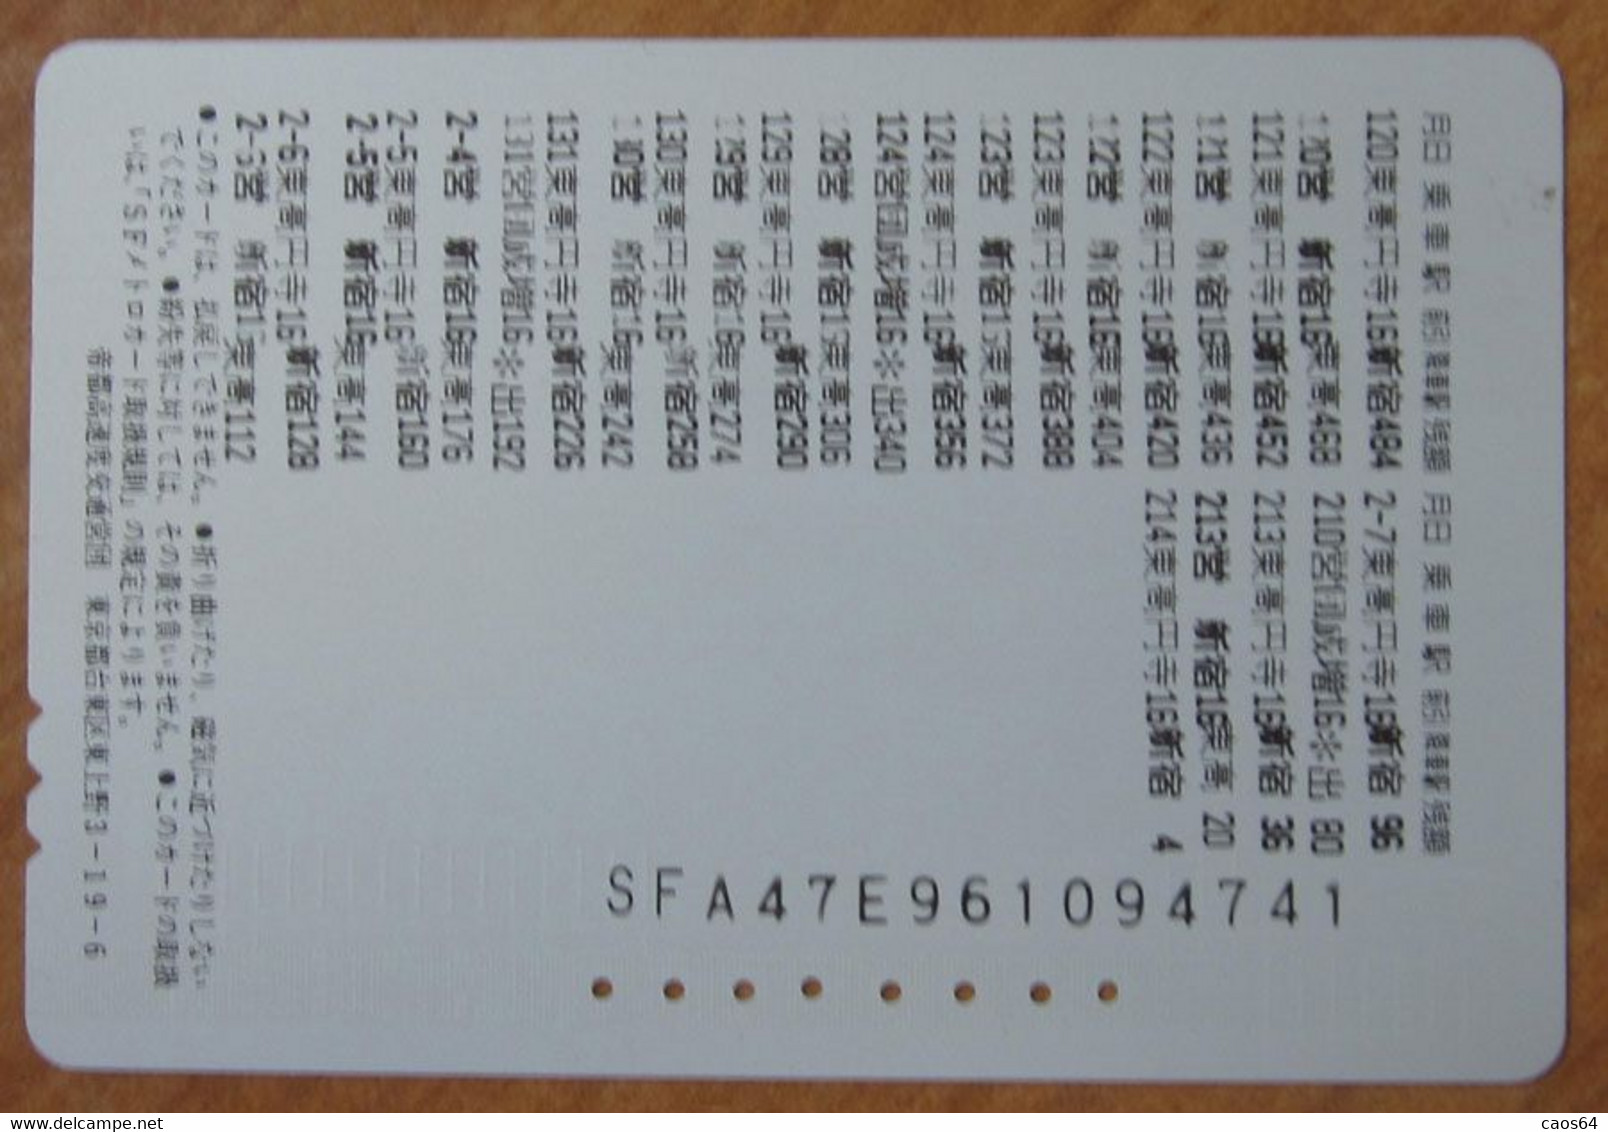 GIAPPONE Ticket Biglietto Treni Metro Bus - Fiori Flower Railway SF Card 5.000 ¥ - Usato - Ohne Zuordnung